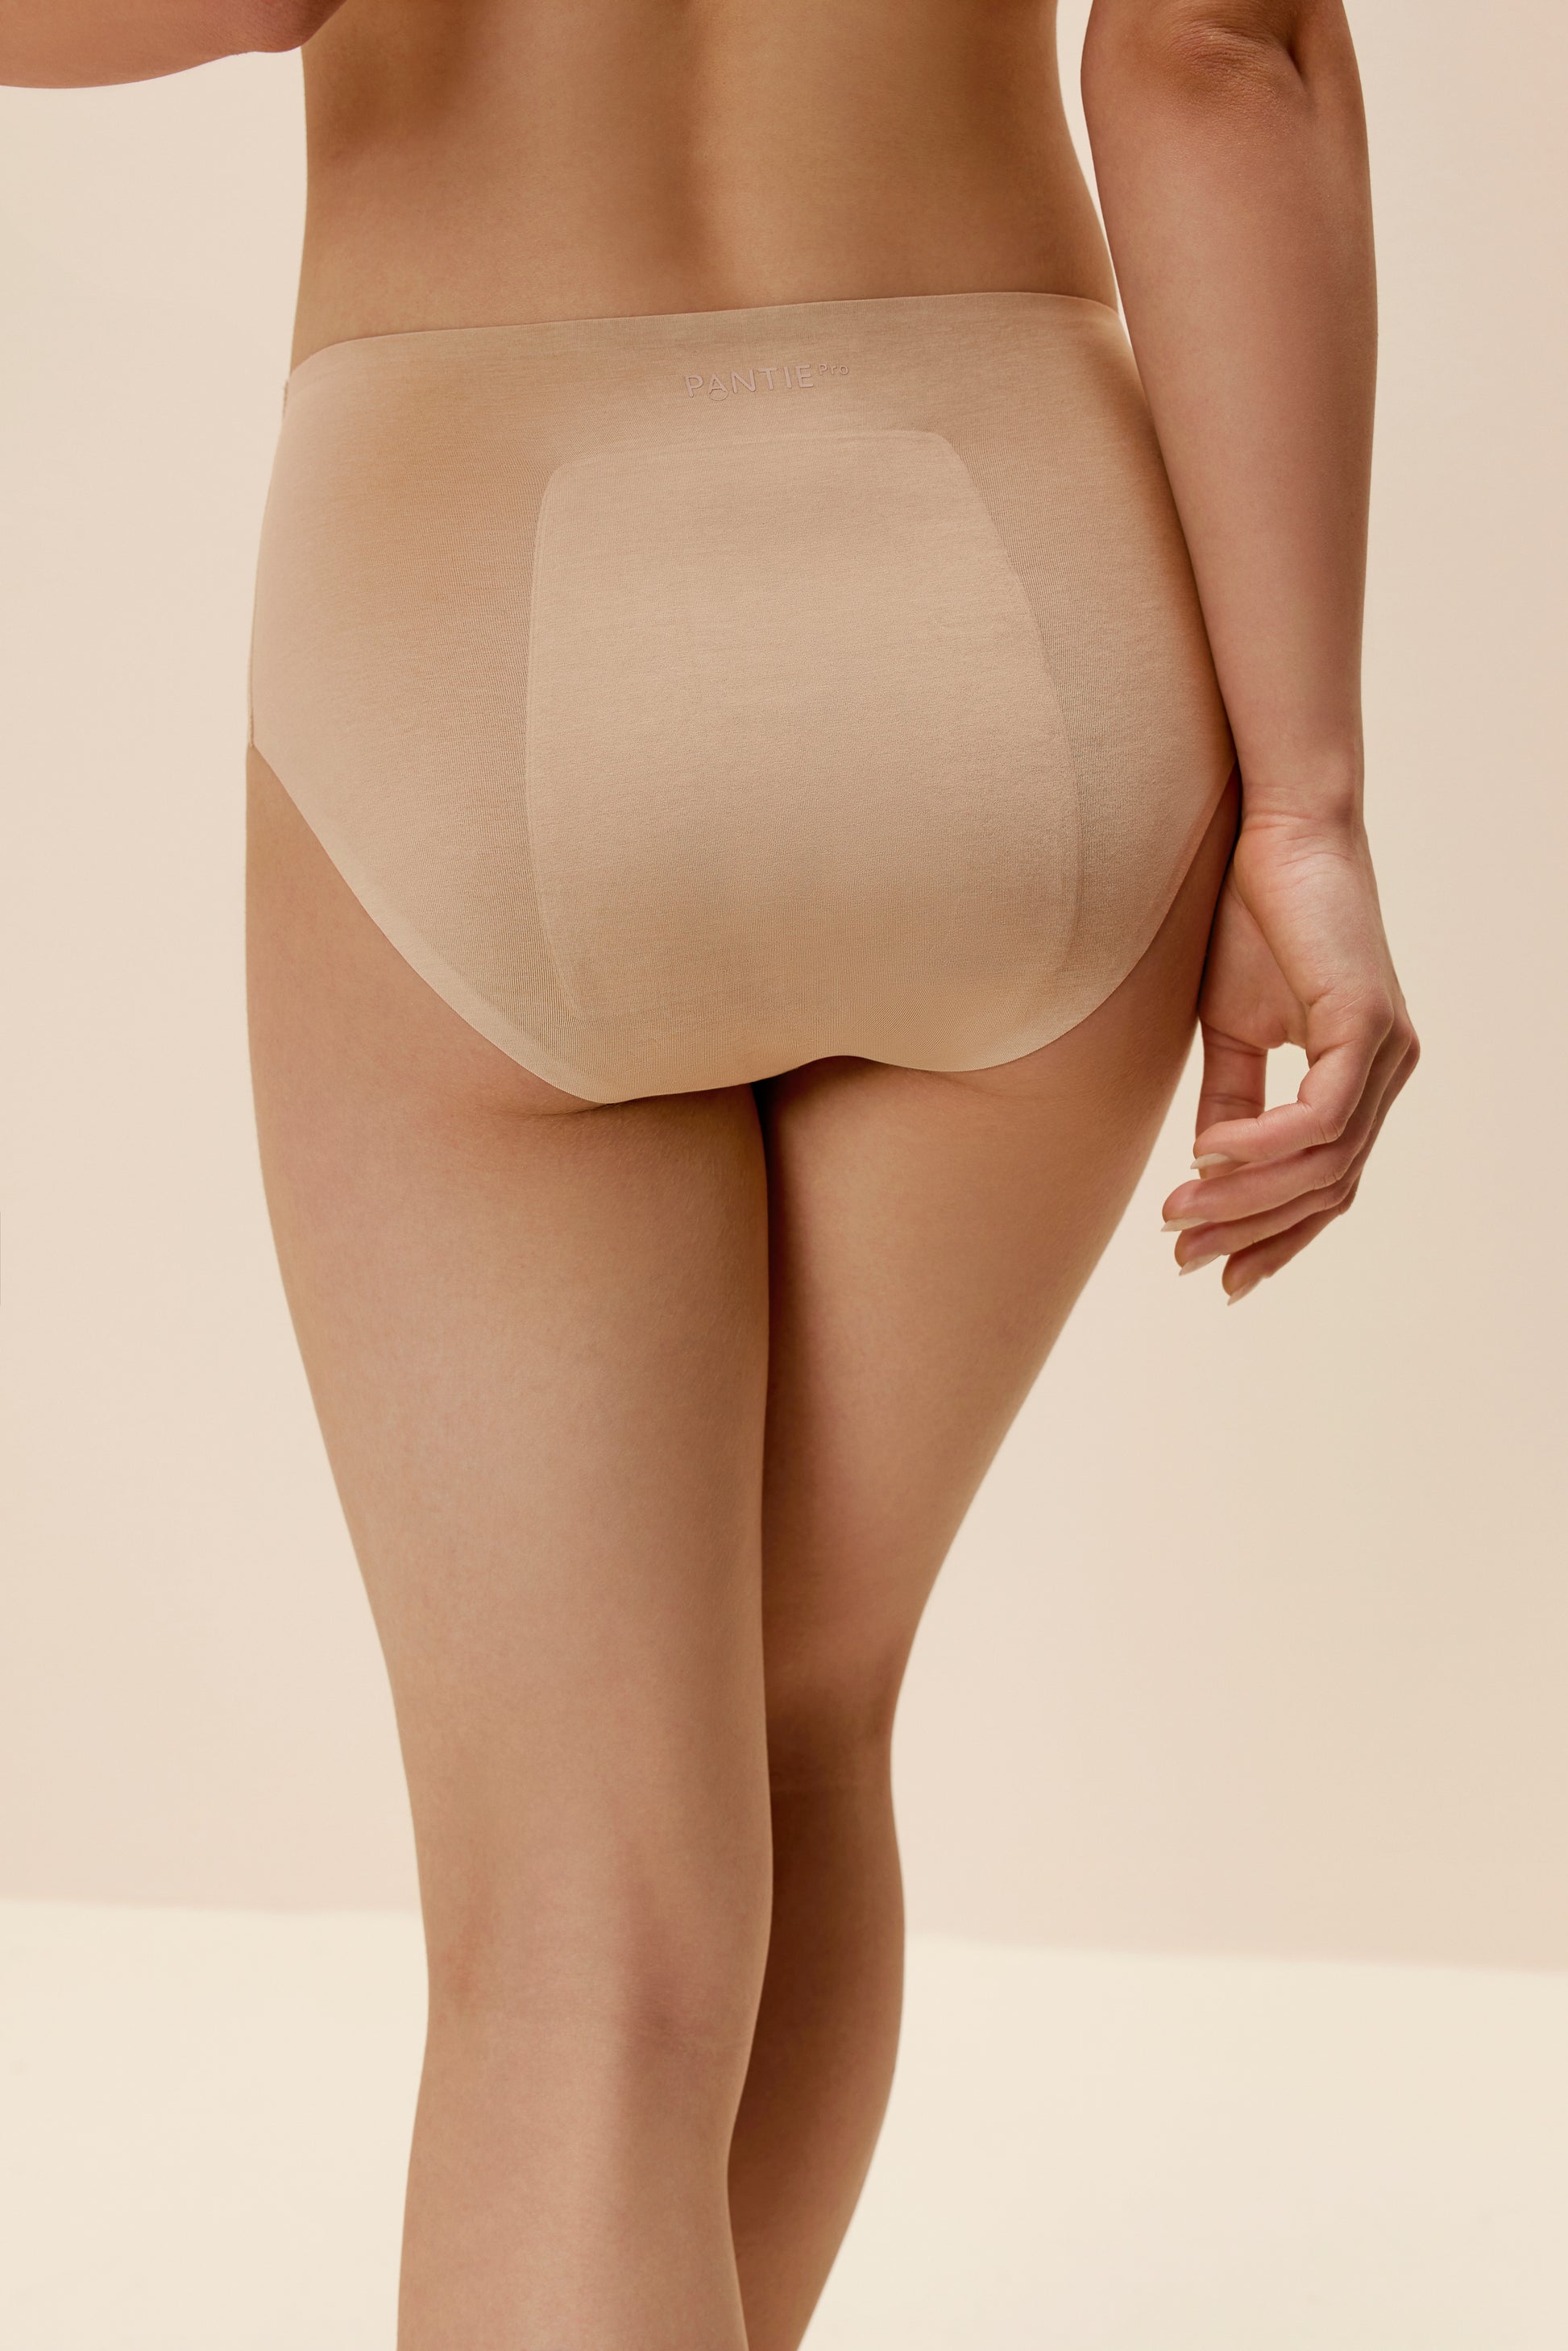 Herwey 3pcs/Bag Night Use Sanitary Pads Briefs Disposable Menstrual  Underwear Maxi Overnight Pantyliner Feminine Care 